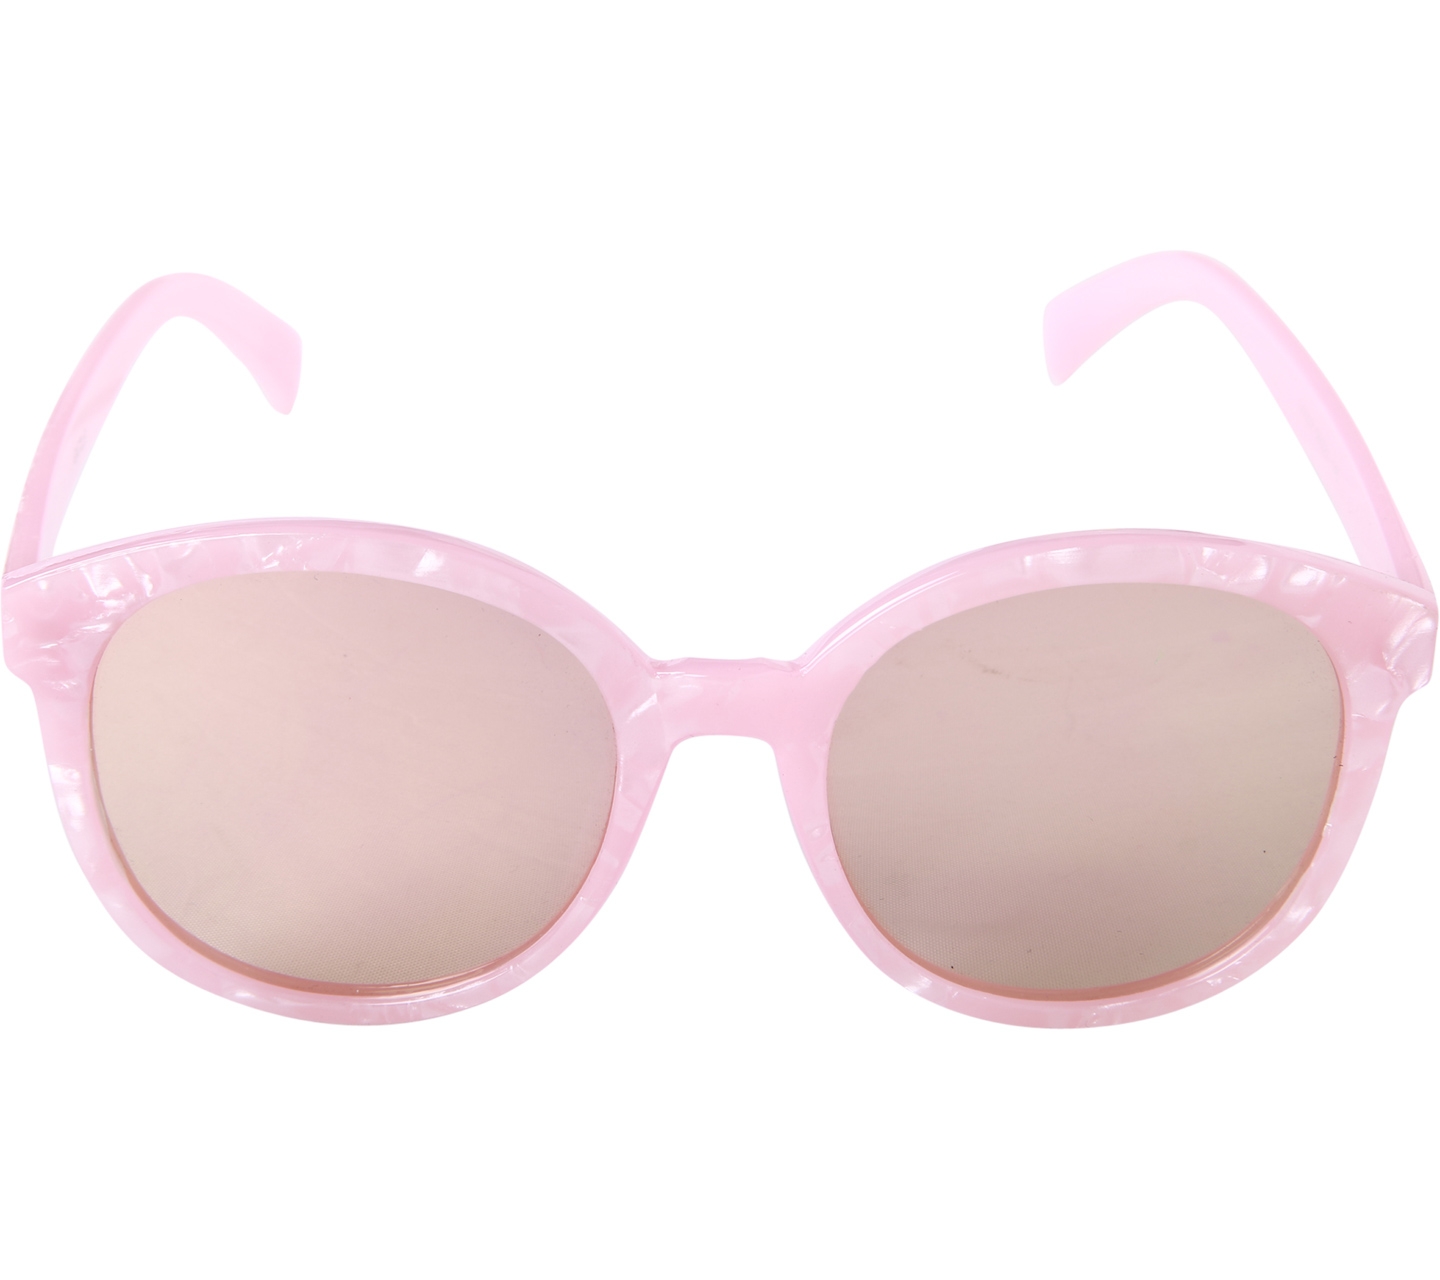 Gaze Eyewear Pink Sunglasses